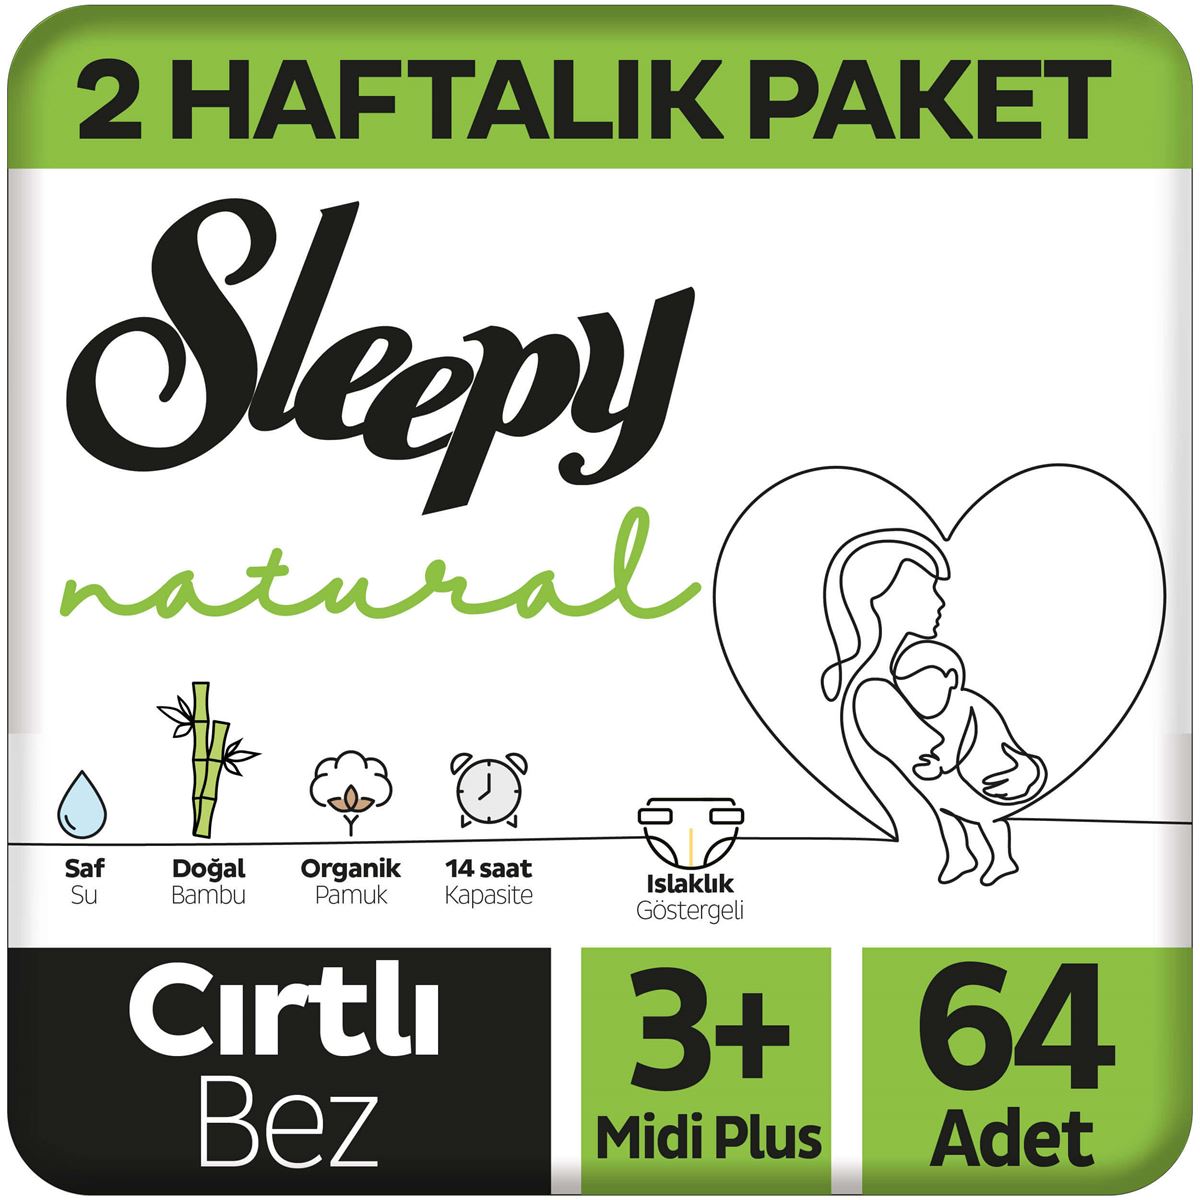 Sleepy Natural 2 Haftalık Paket Bebek Bezi 3+ Numara Midi Plus 64 Adet